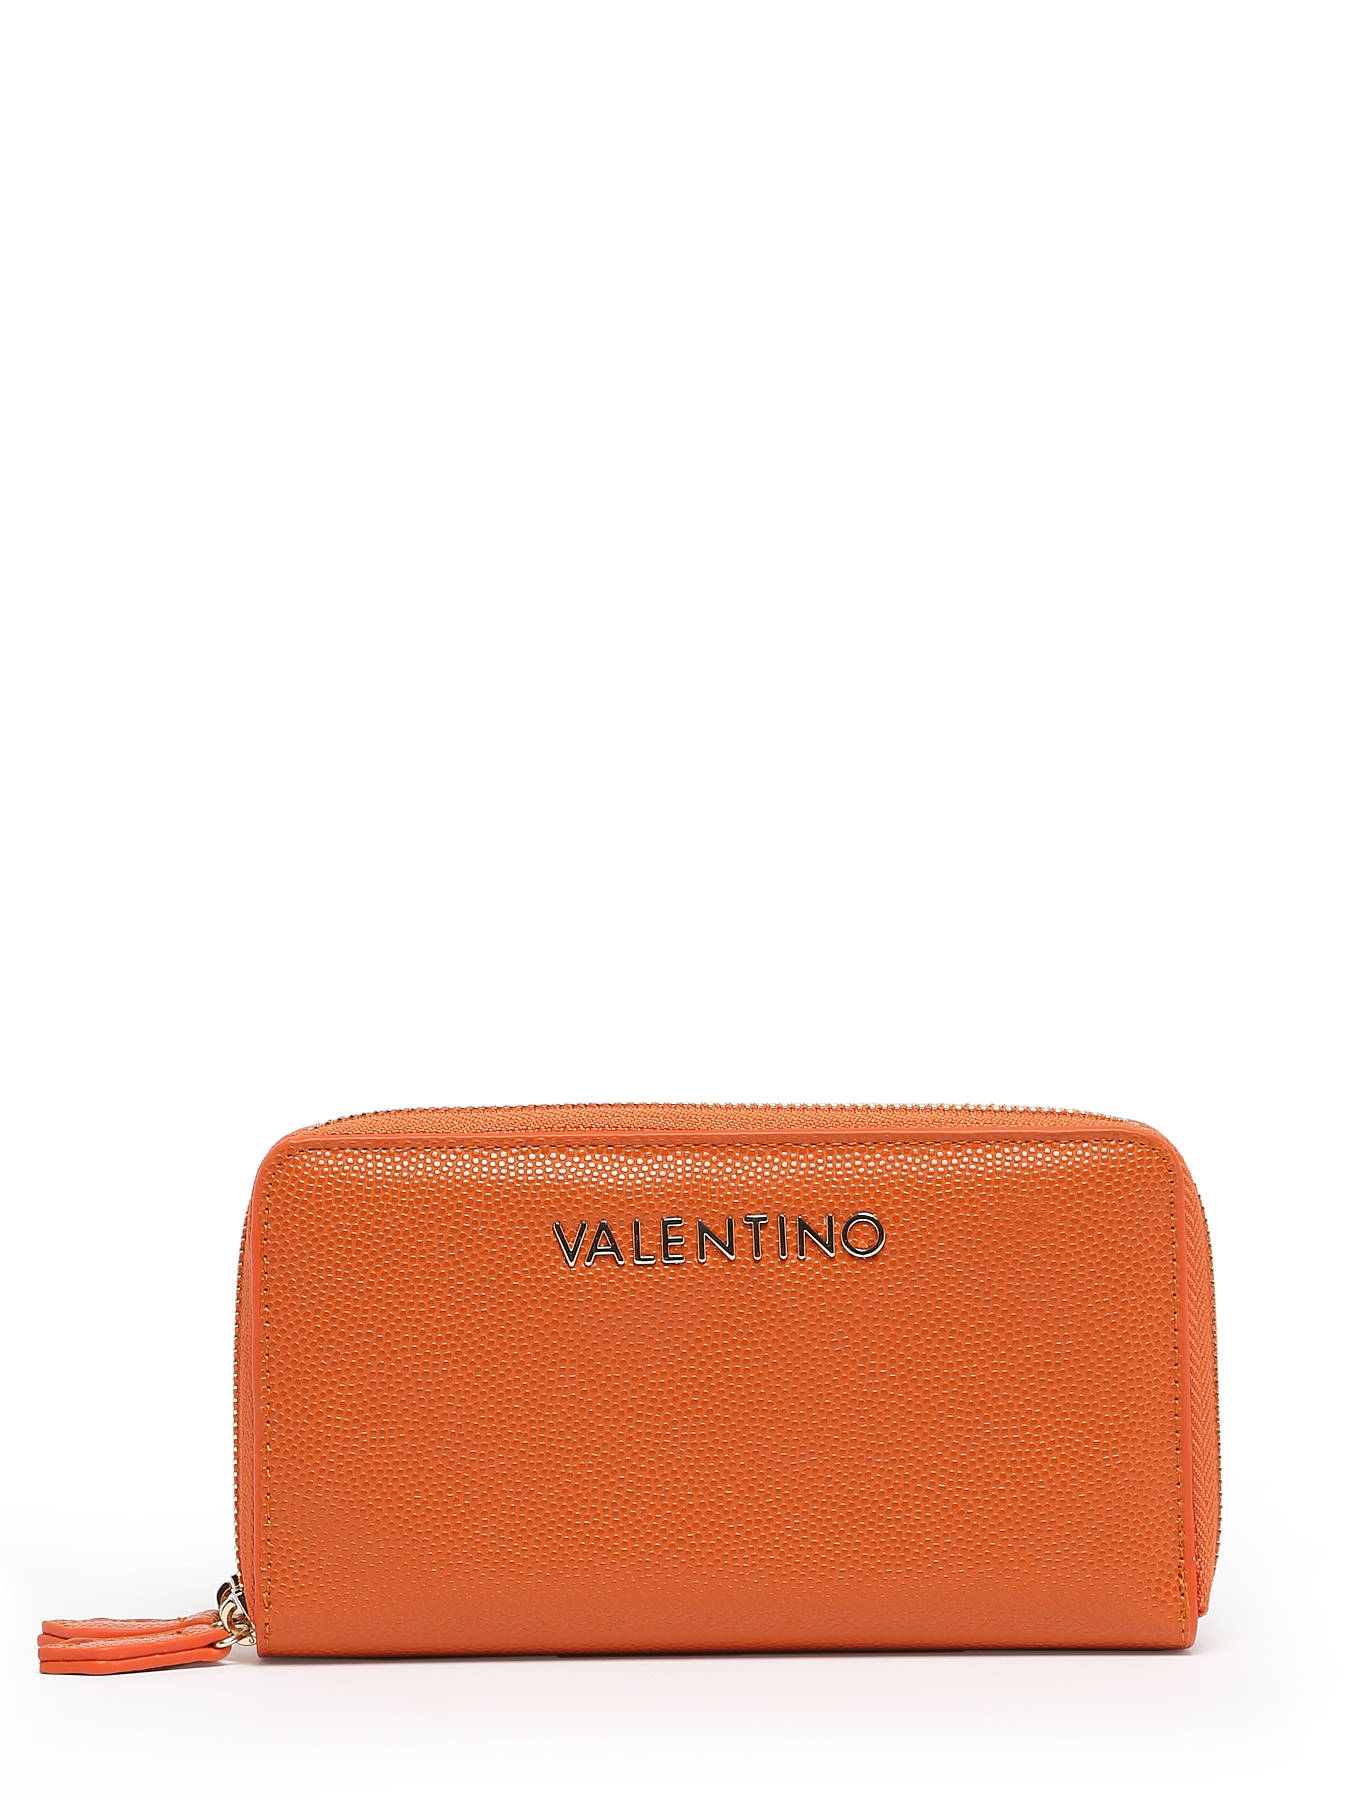 Valentino Women Purse Wallet Collection Stock Photo 2363877923 |  Shutterstock